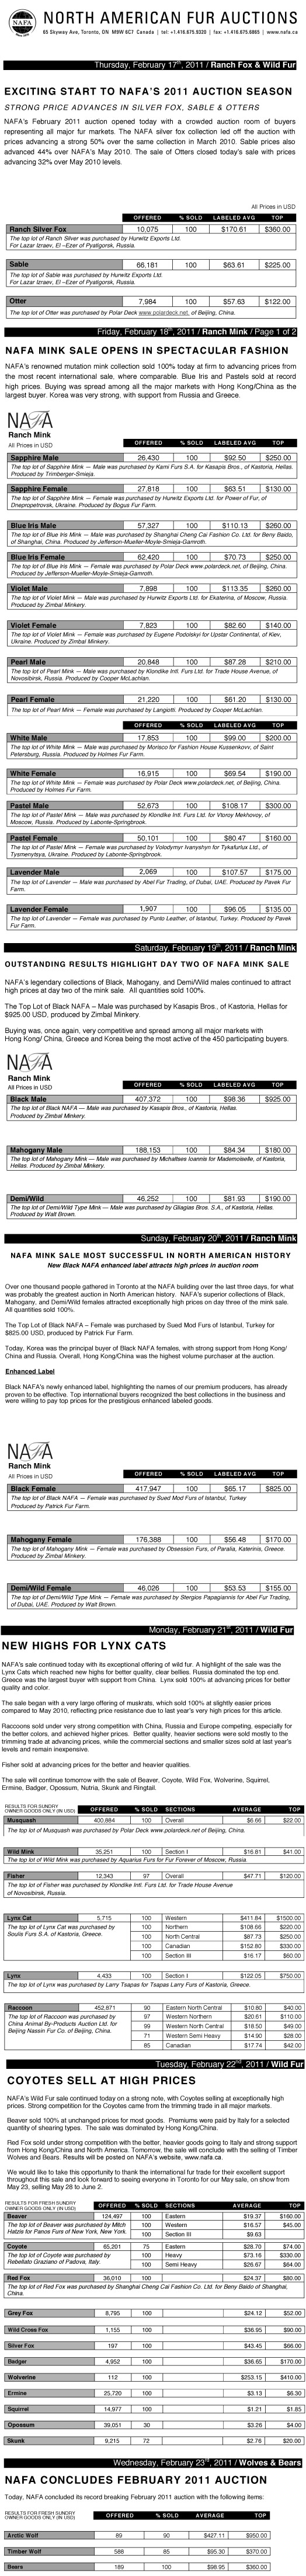 NAFA Wild Fur Auction results